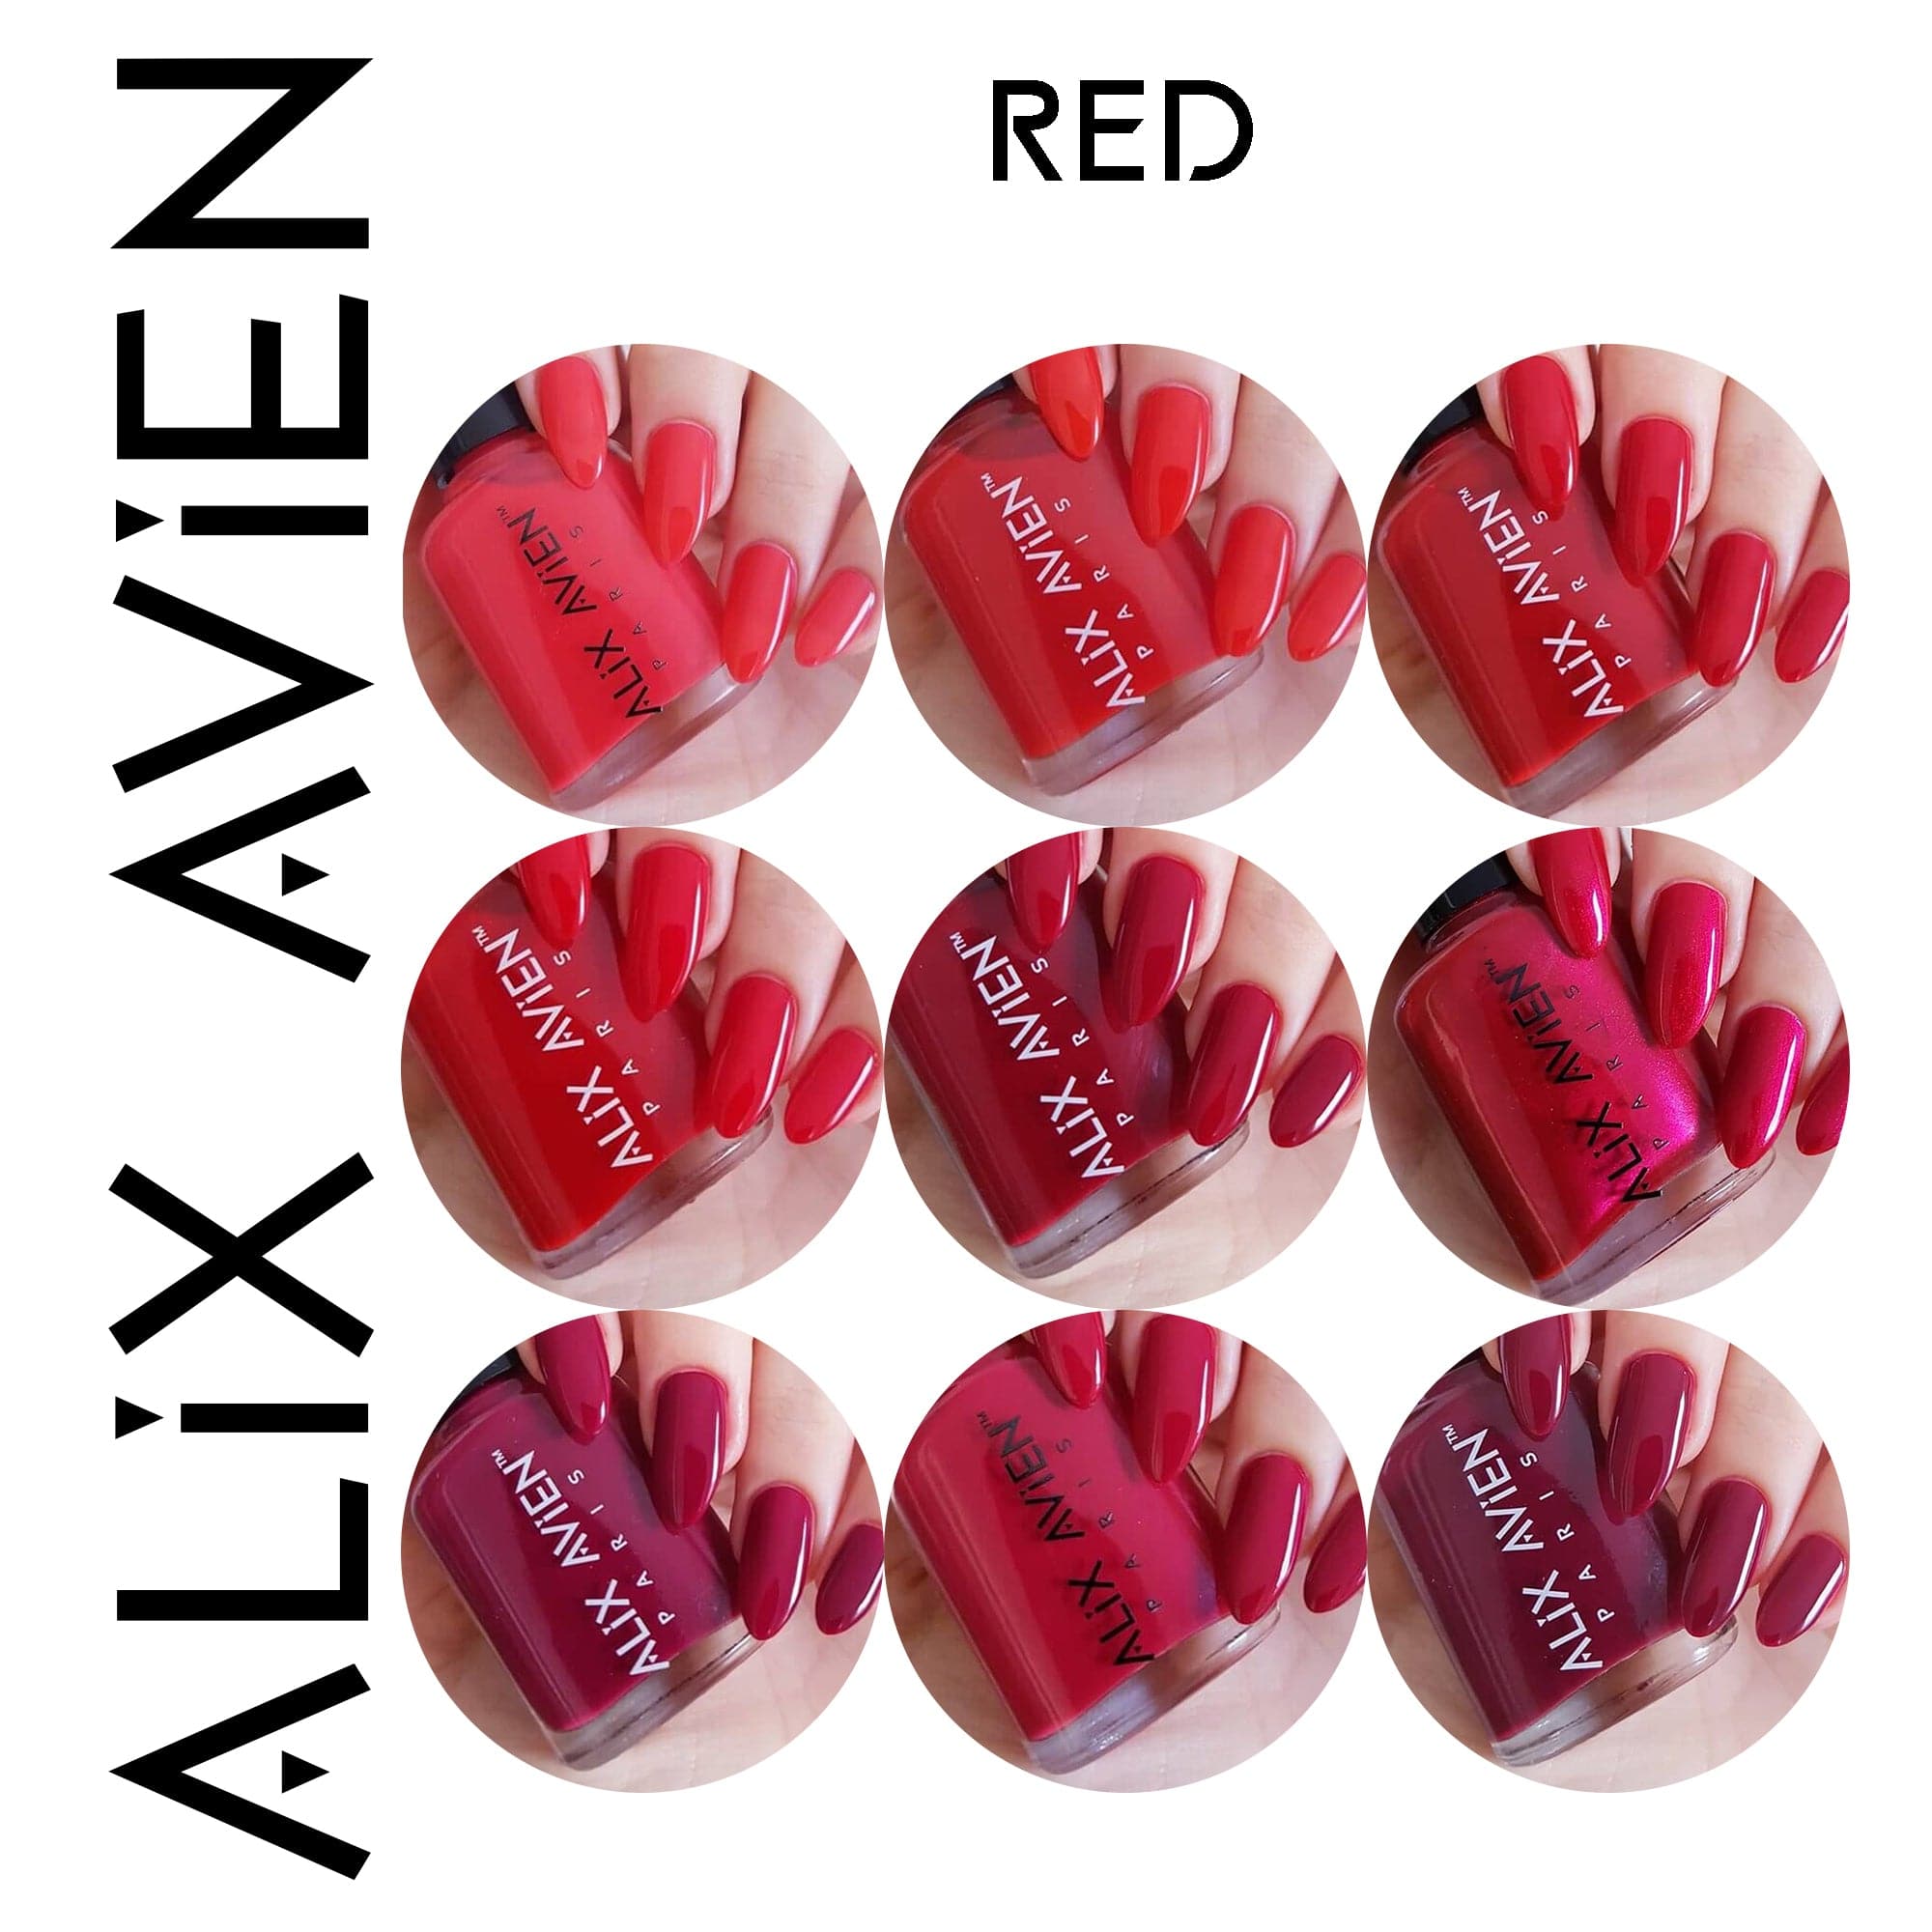 Alix Avien - Nail Polish No.17 (Dark Red) - Eson Direct